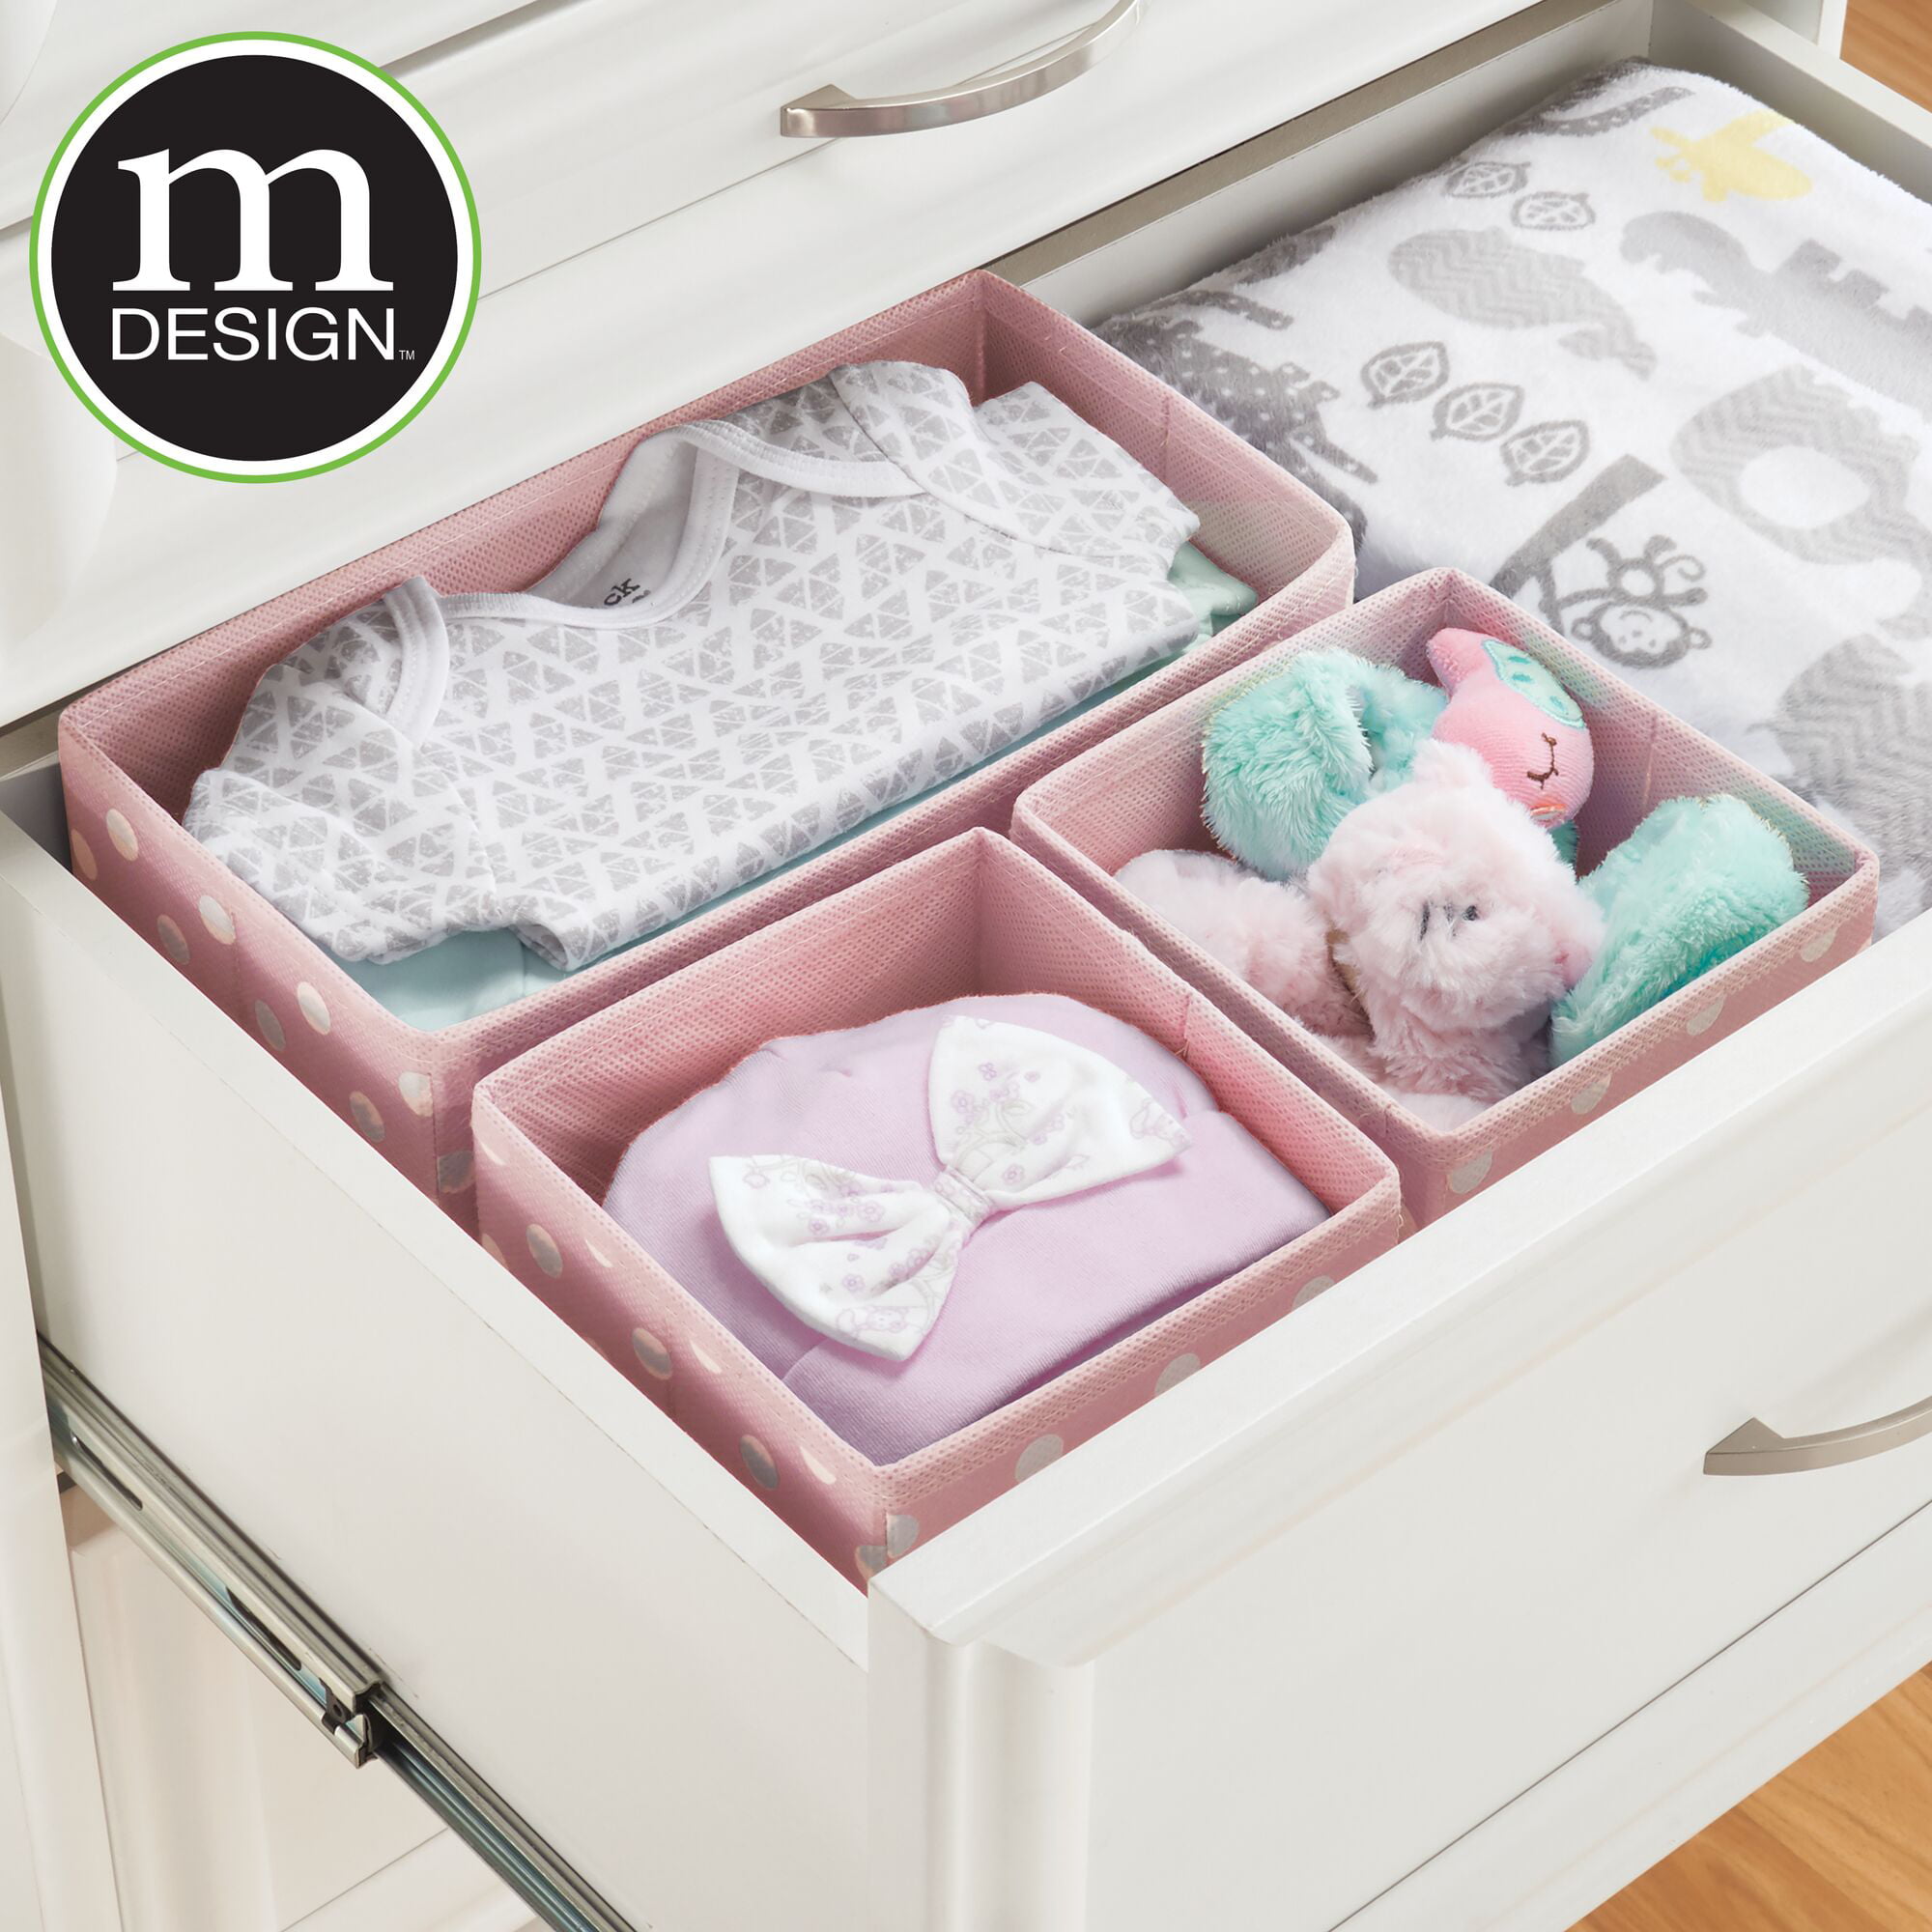 mDesign Soft Fabric Dresser Drawer and Closet Storage Organizer for Kids/Toddler Room Herringbone Print Nursery Gray Set of 12 Bedroom Playroom Organizing Bins in 2 Sizes 